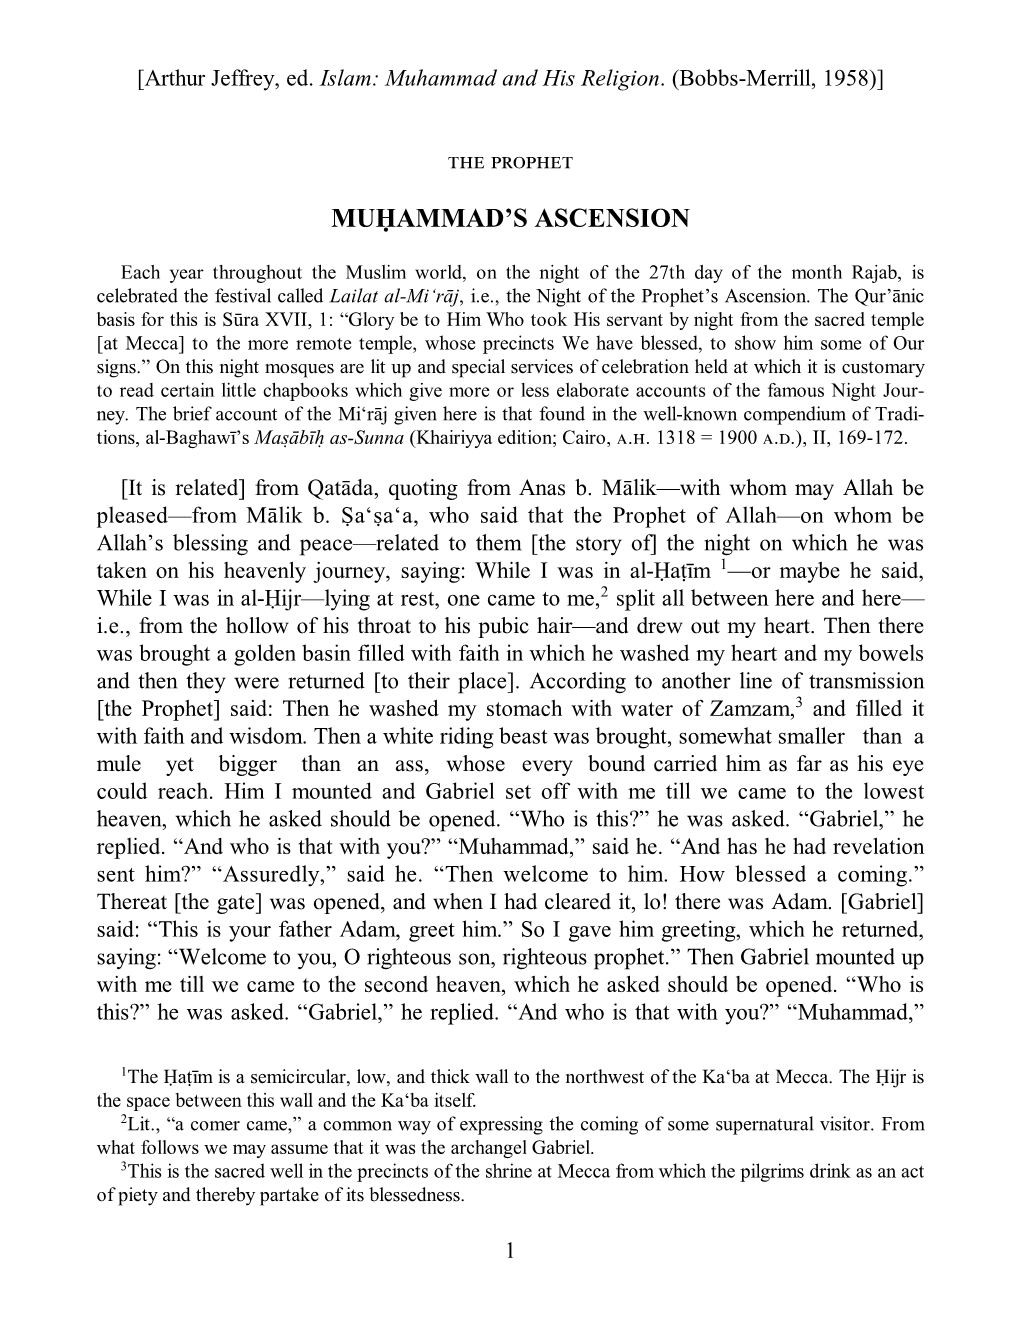 Muhammad's Ascension